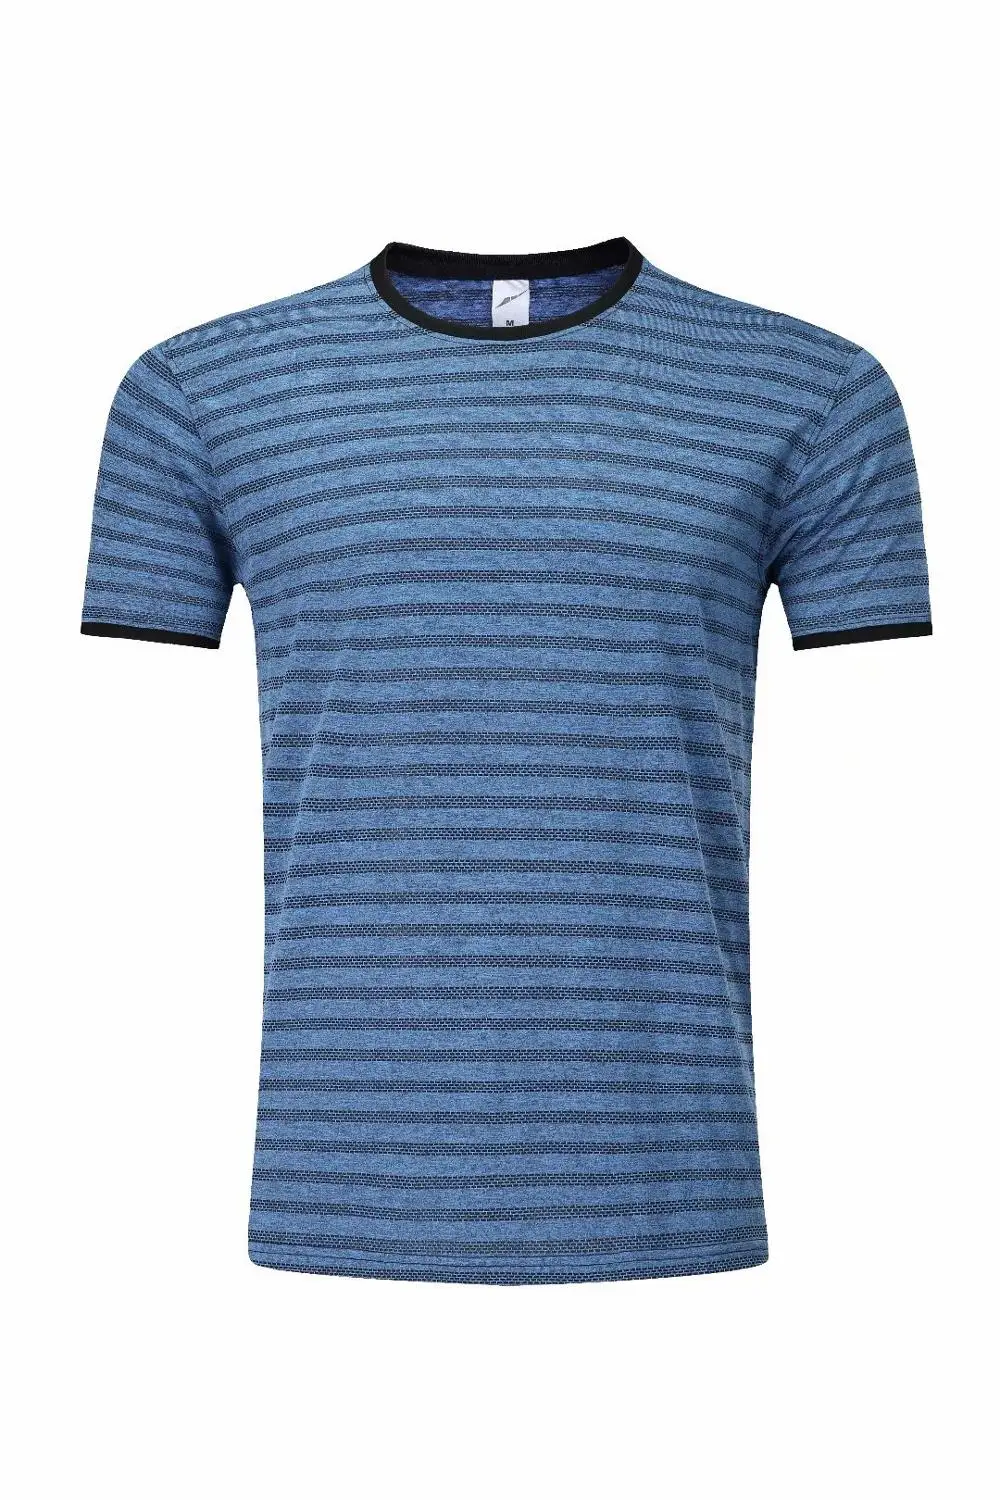 1807 Light blue t-shirt polo shirts